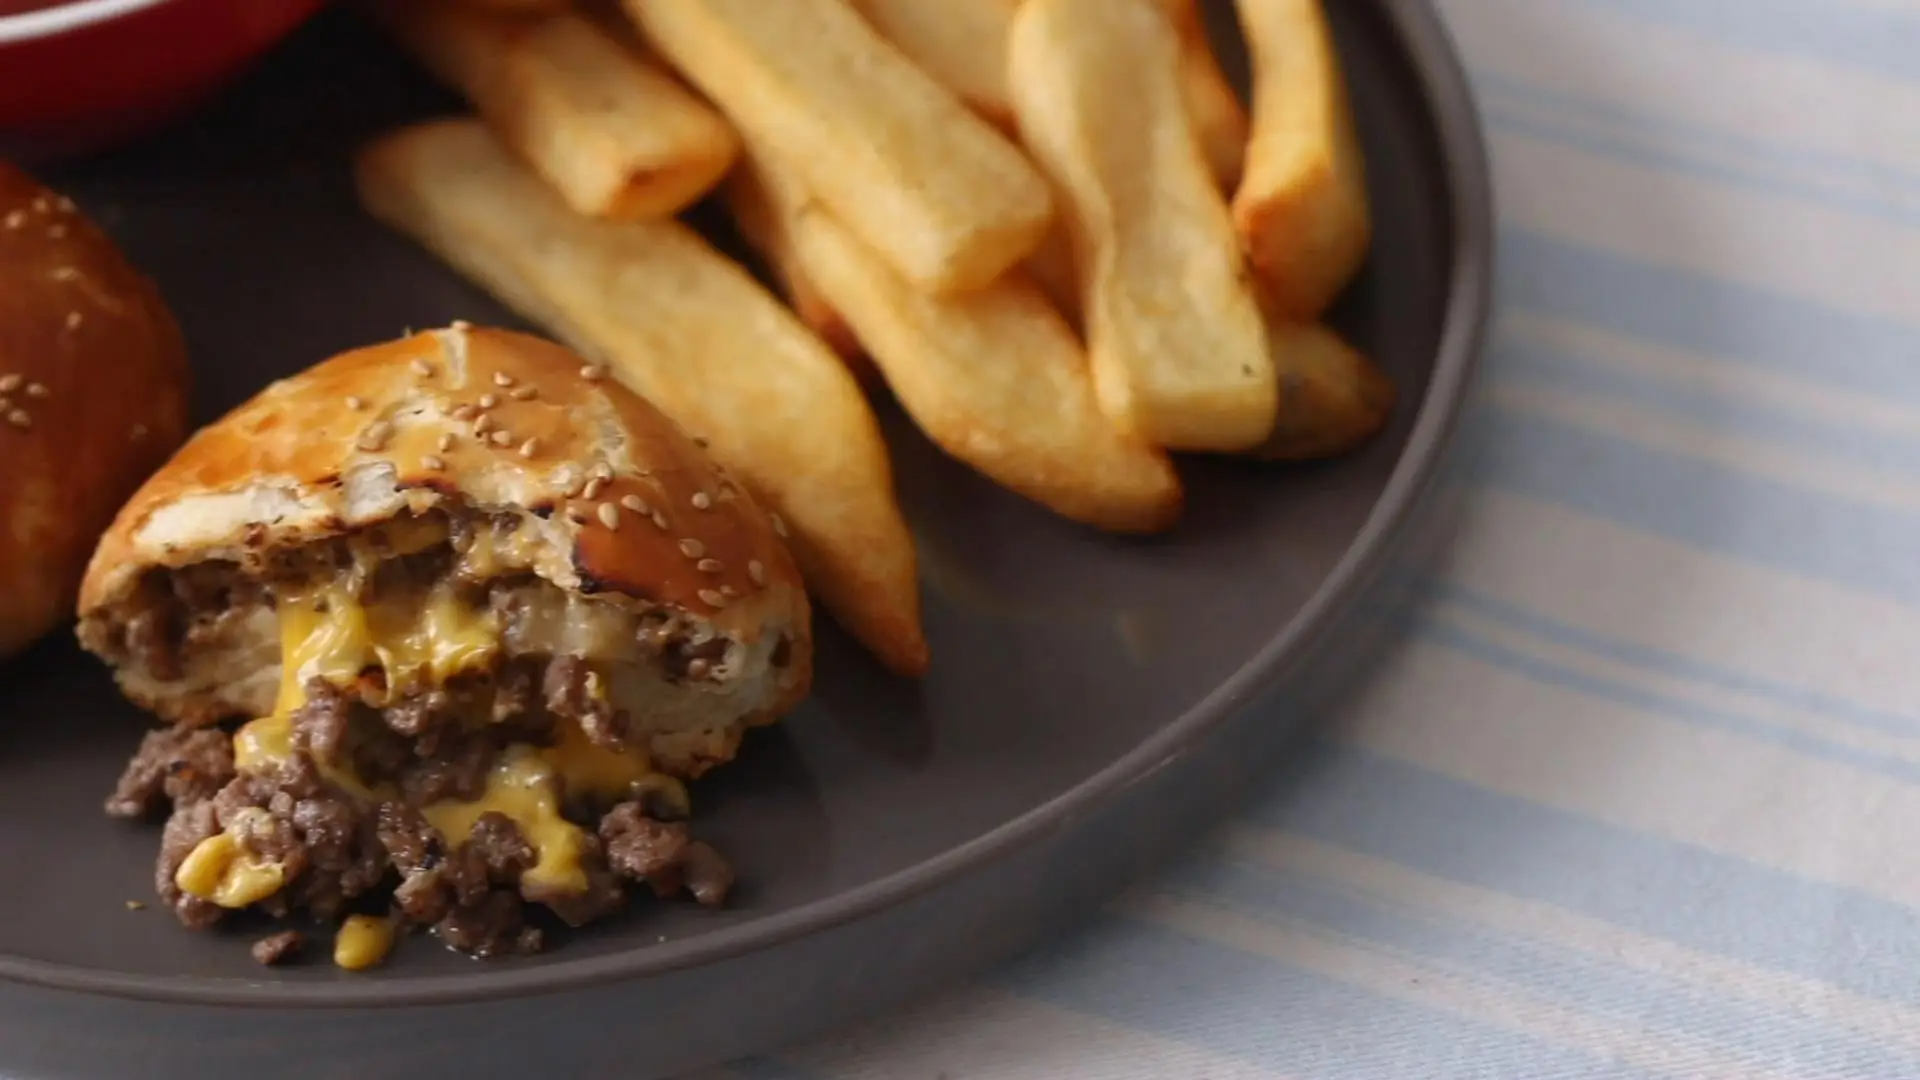 A close up of the cheeseburger